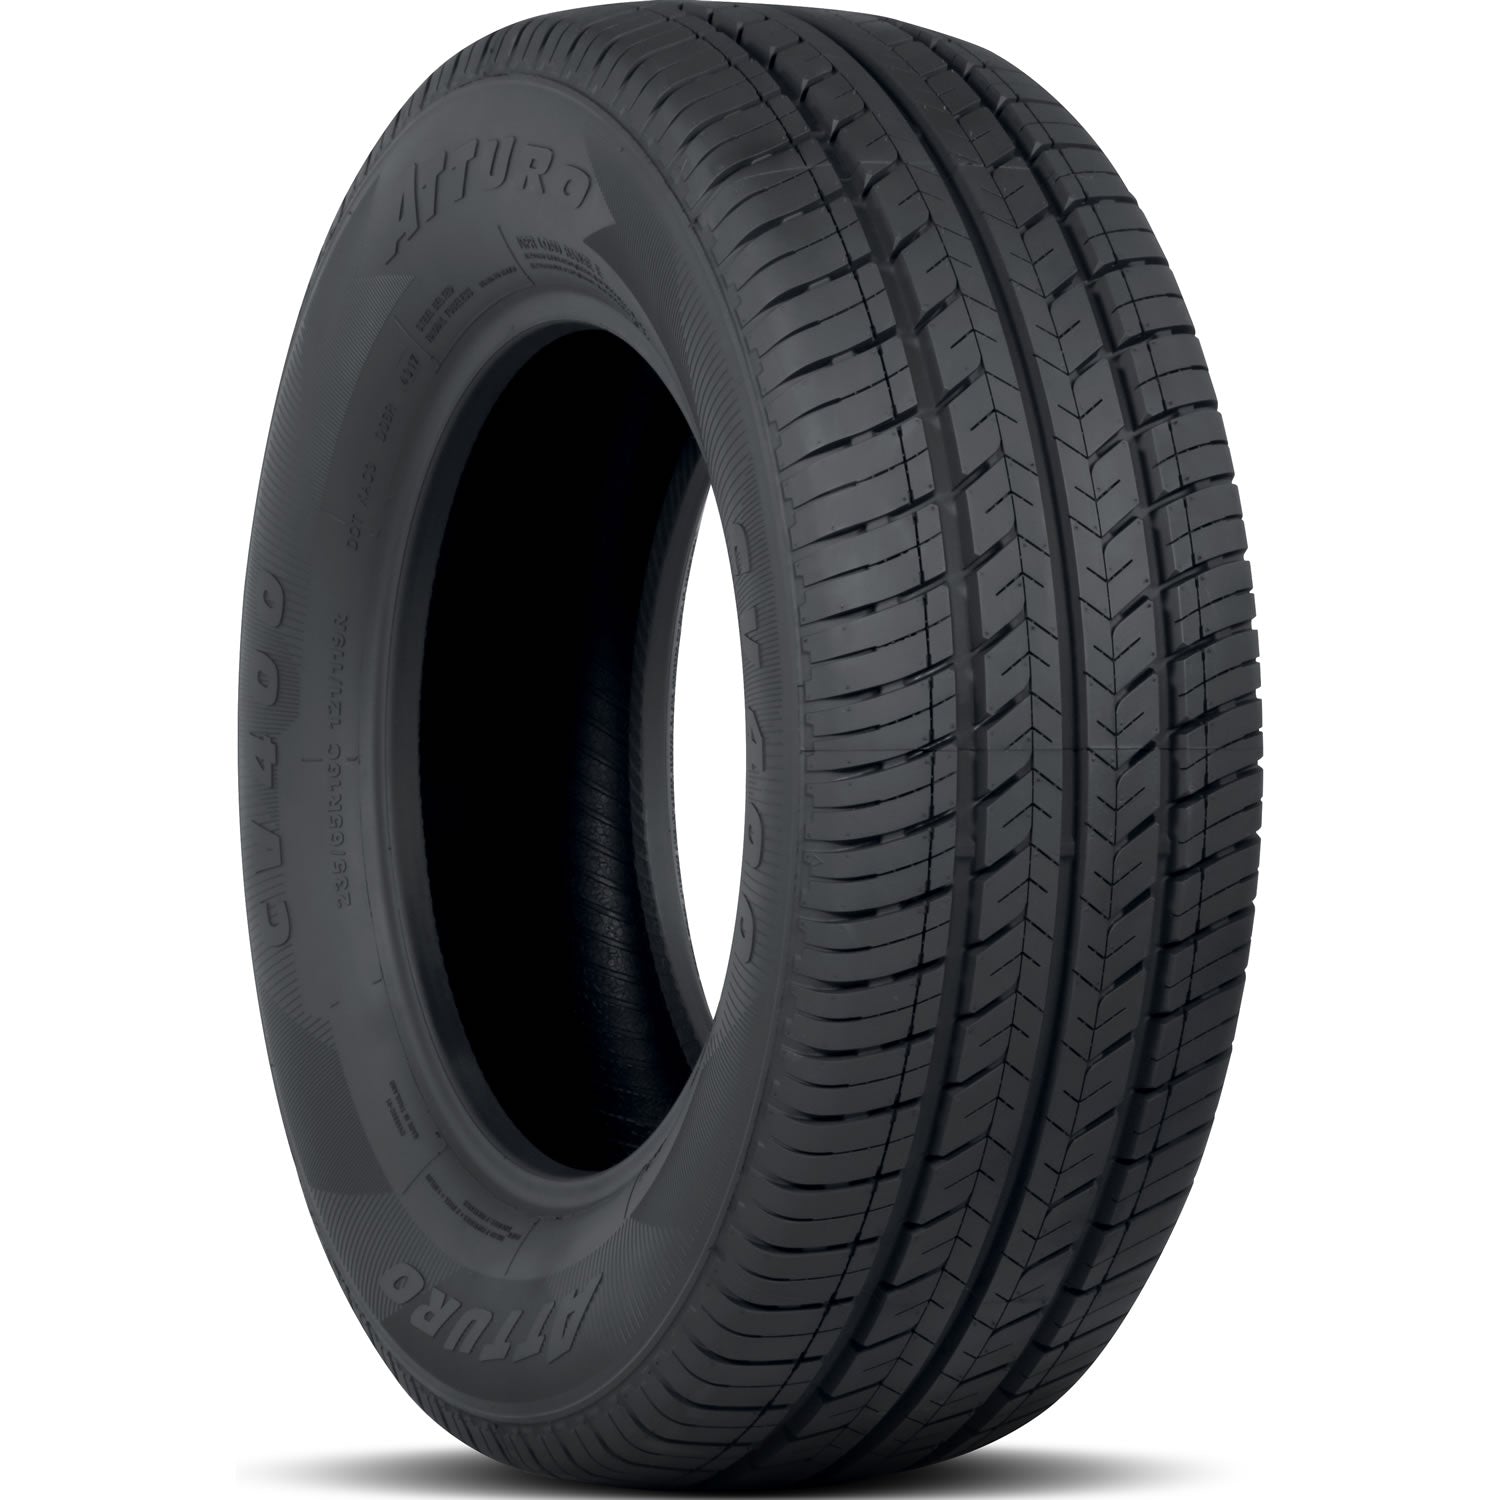 ATTURO CV400 205/65R16C (26.5X8.2R 16) Tires